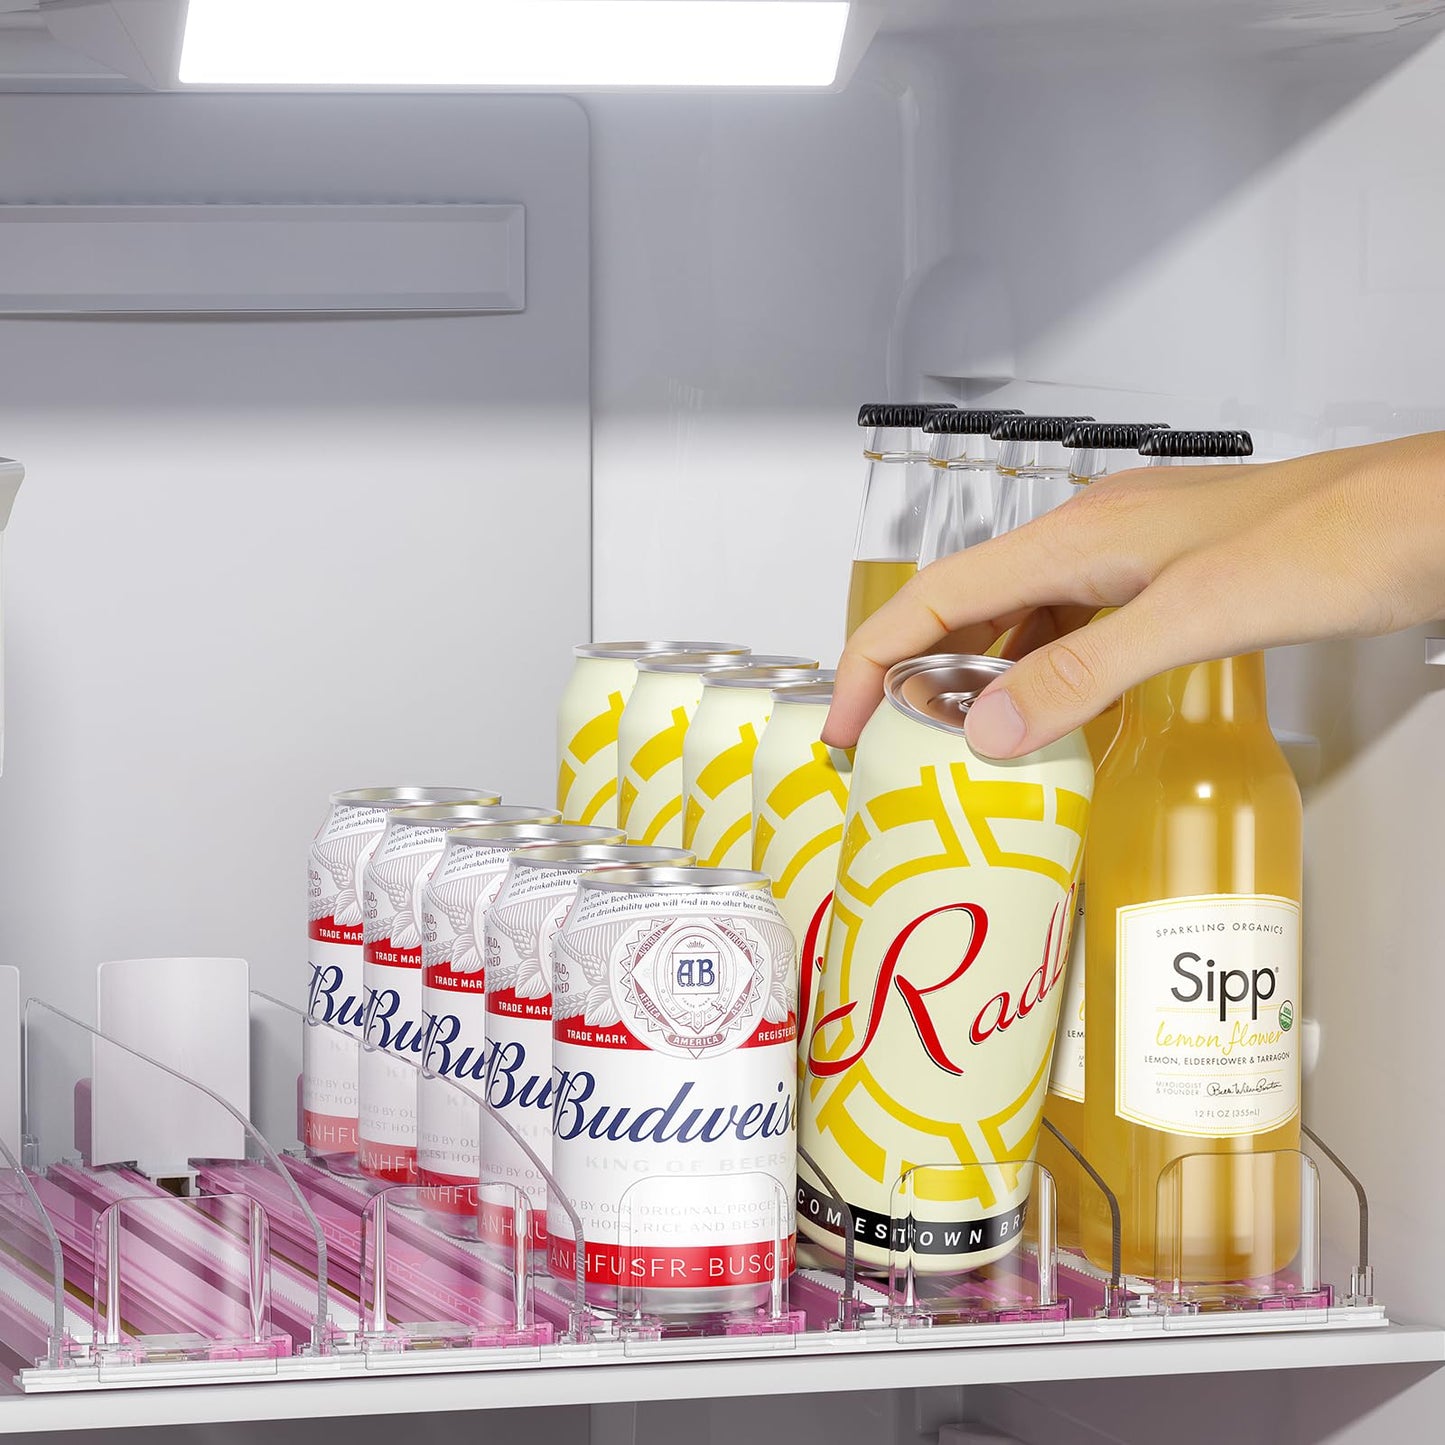 LAMU Self-Pushing Soda Drink Can Dispenser Beverage Organizer for Refrigerator